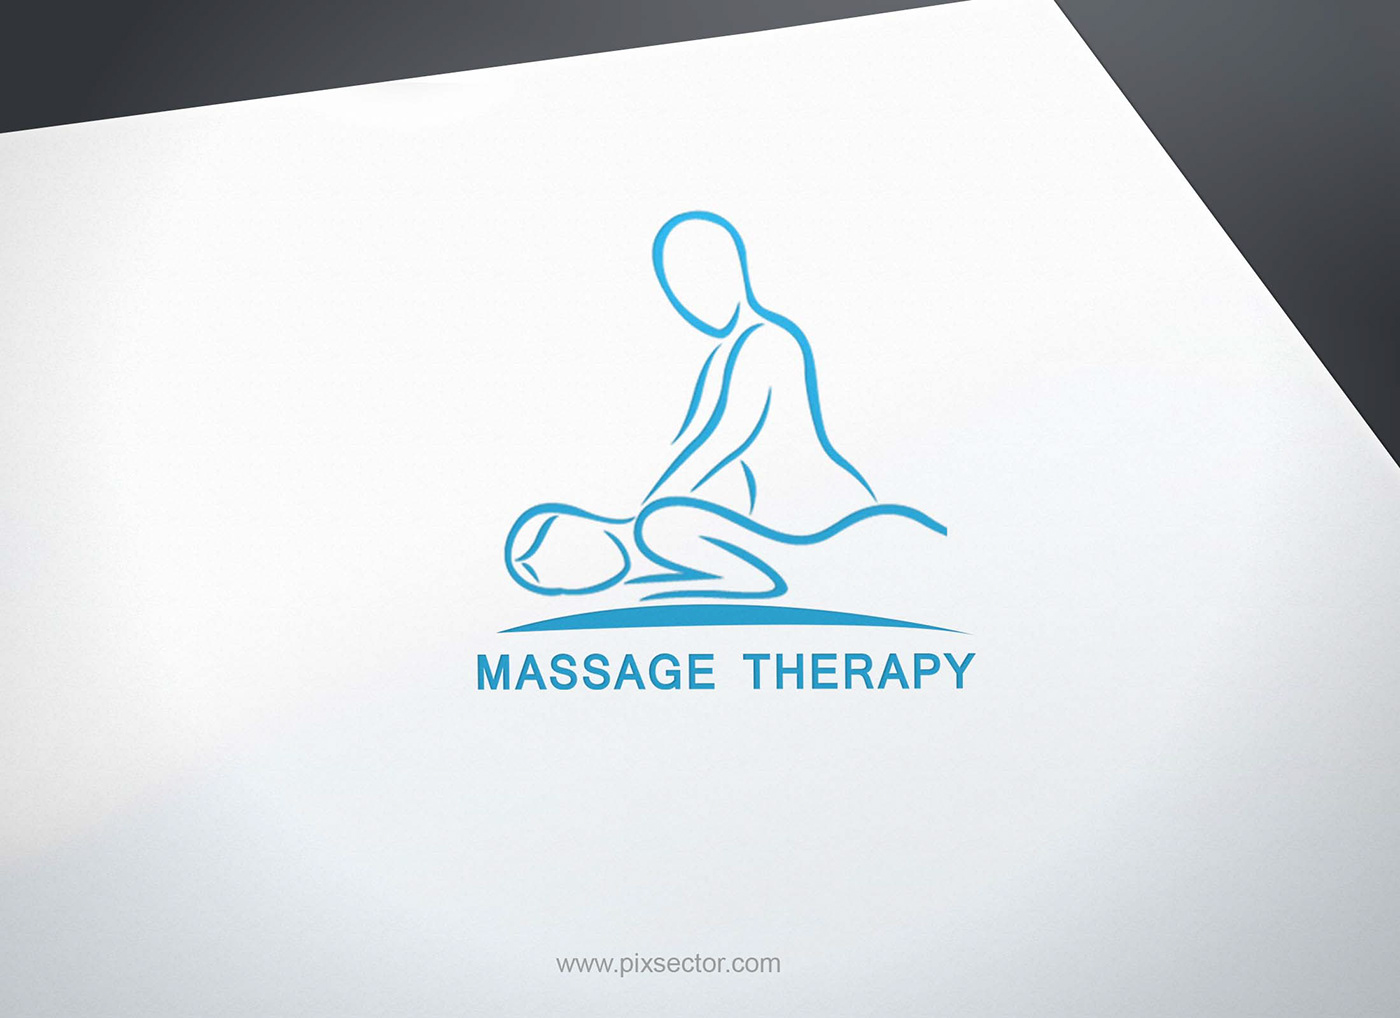 massage logo image body massage  logo massage therapy symbols massage therapy logo design massage logos for sale sports massage Logo Design spa logo